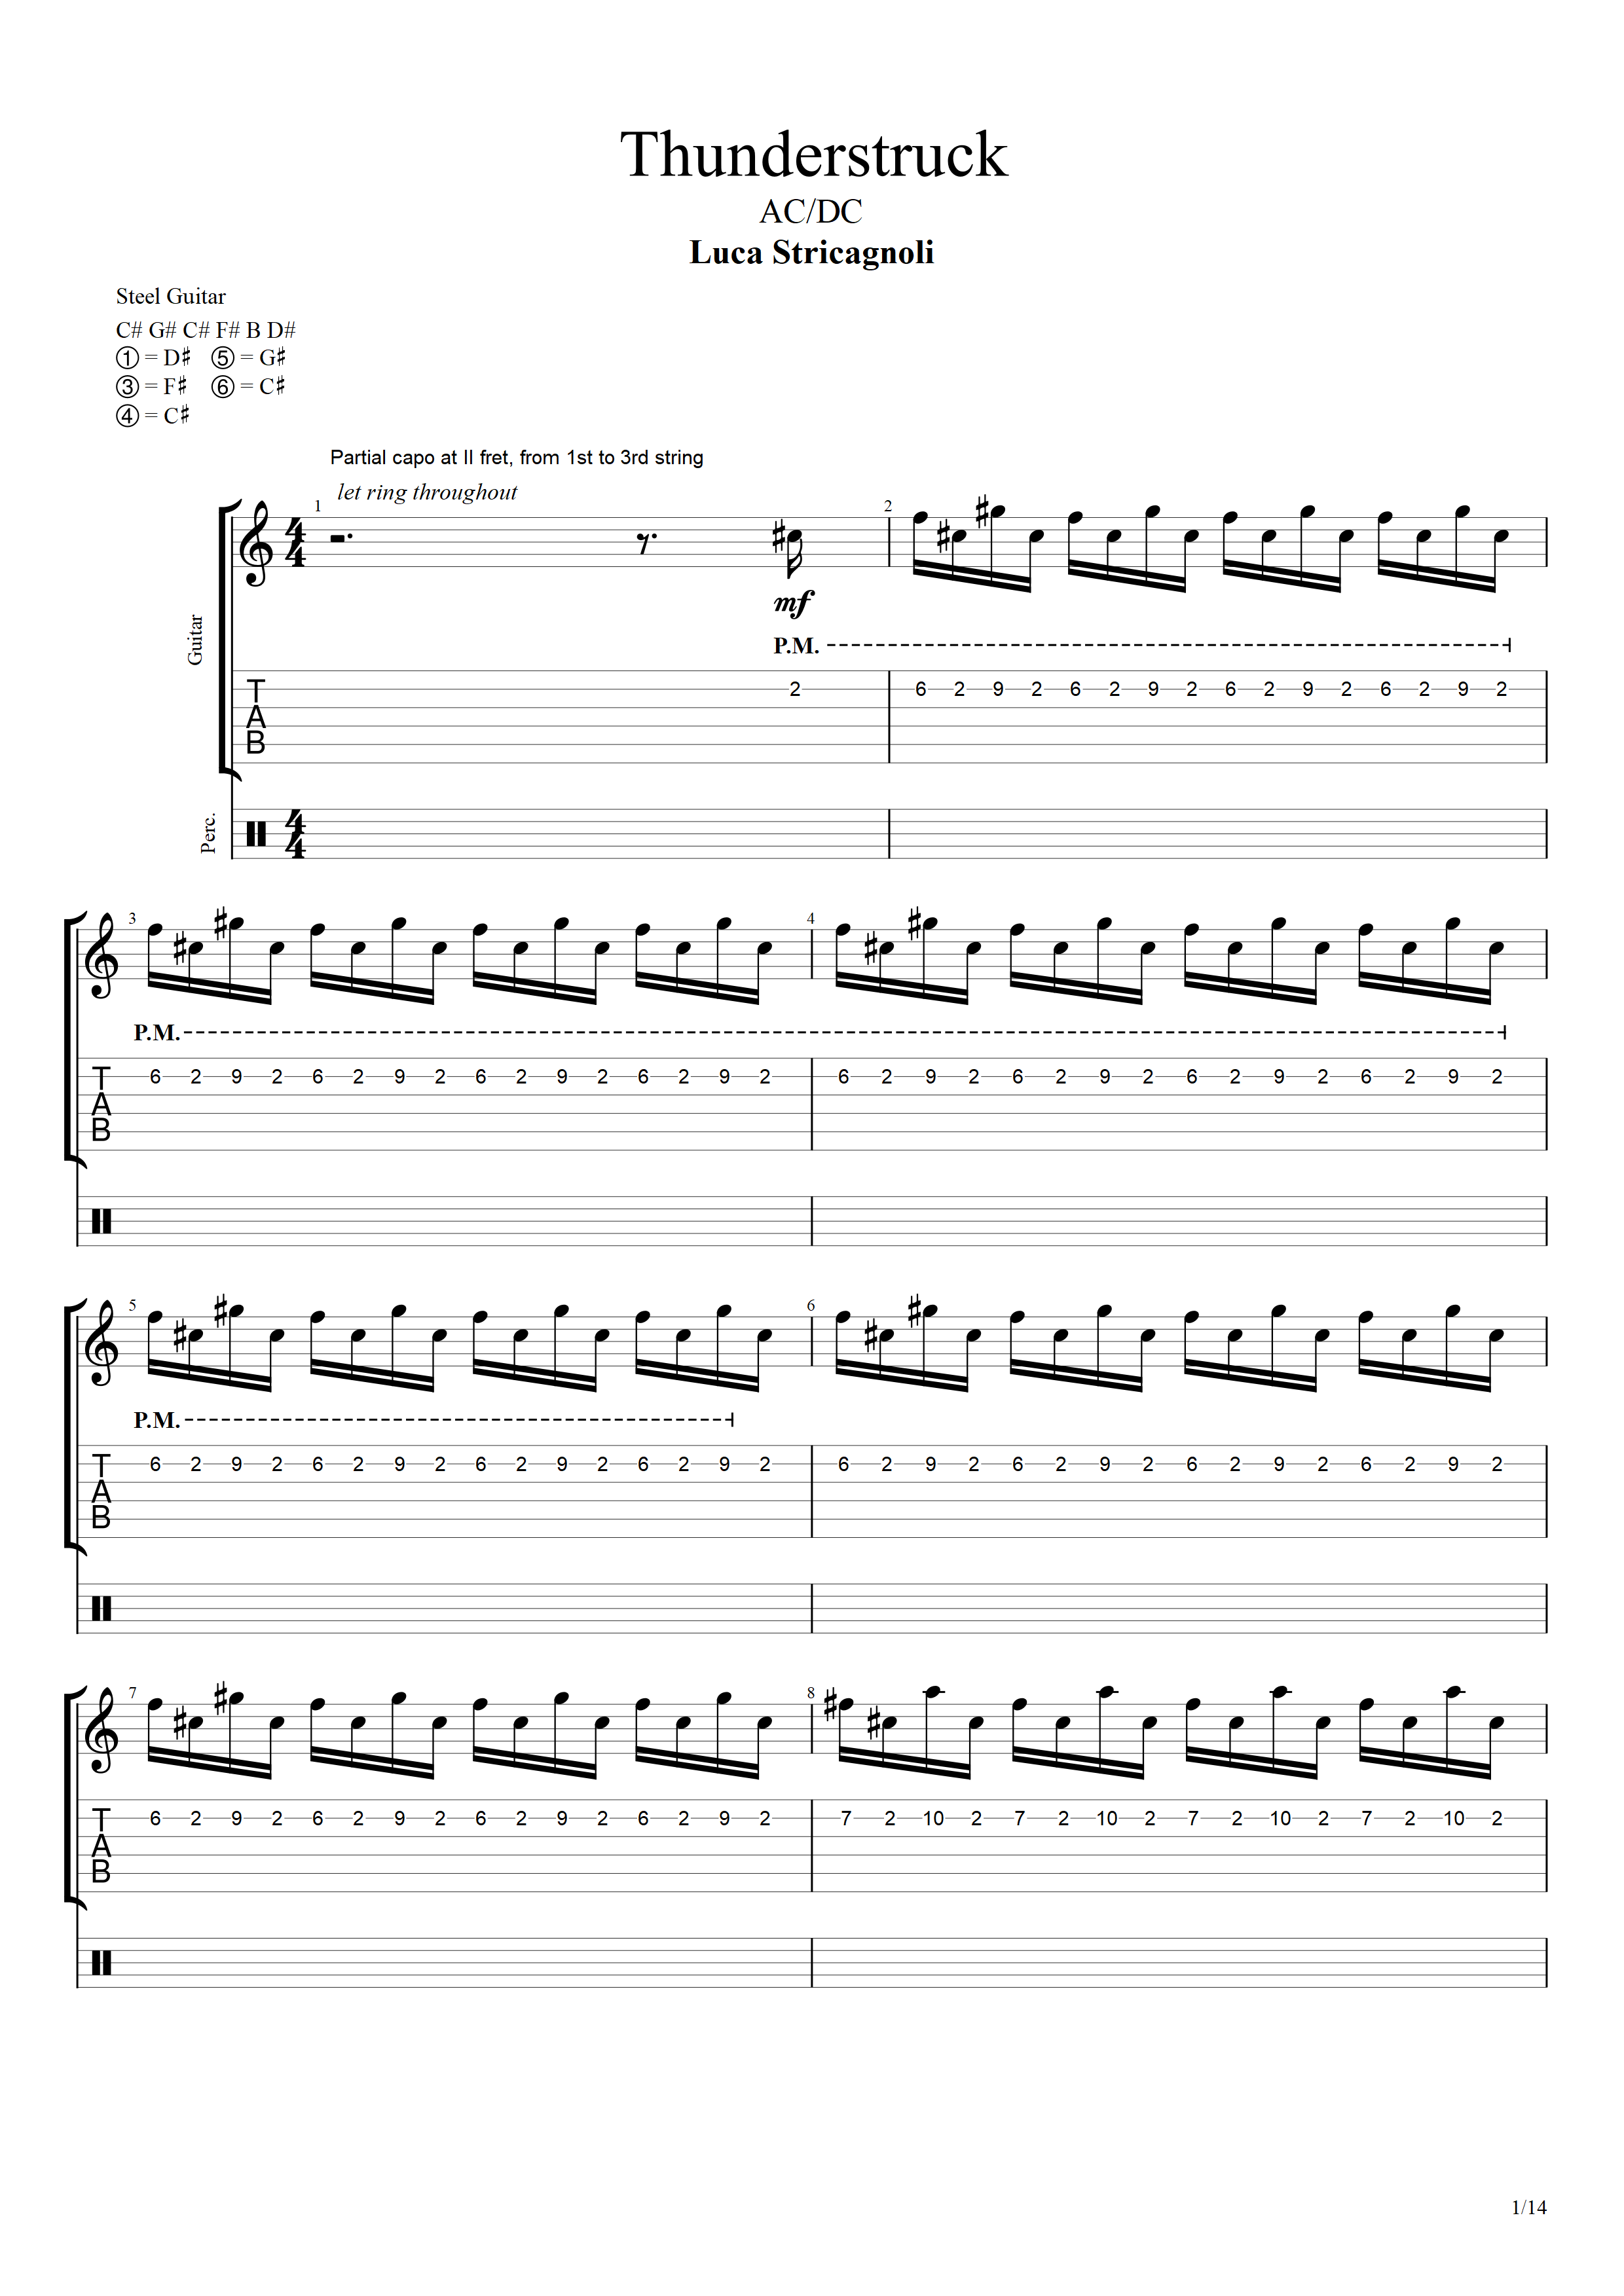 AC/DC Thunderstruck (Electric Guitar) - Sheet music for Electric Guitar ...